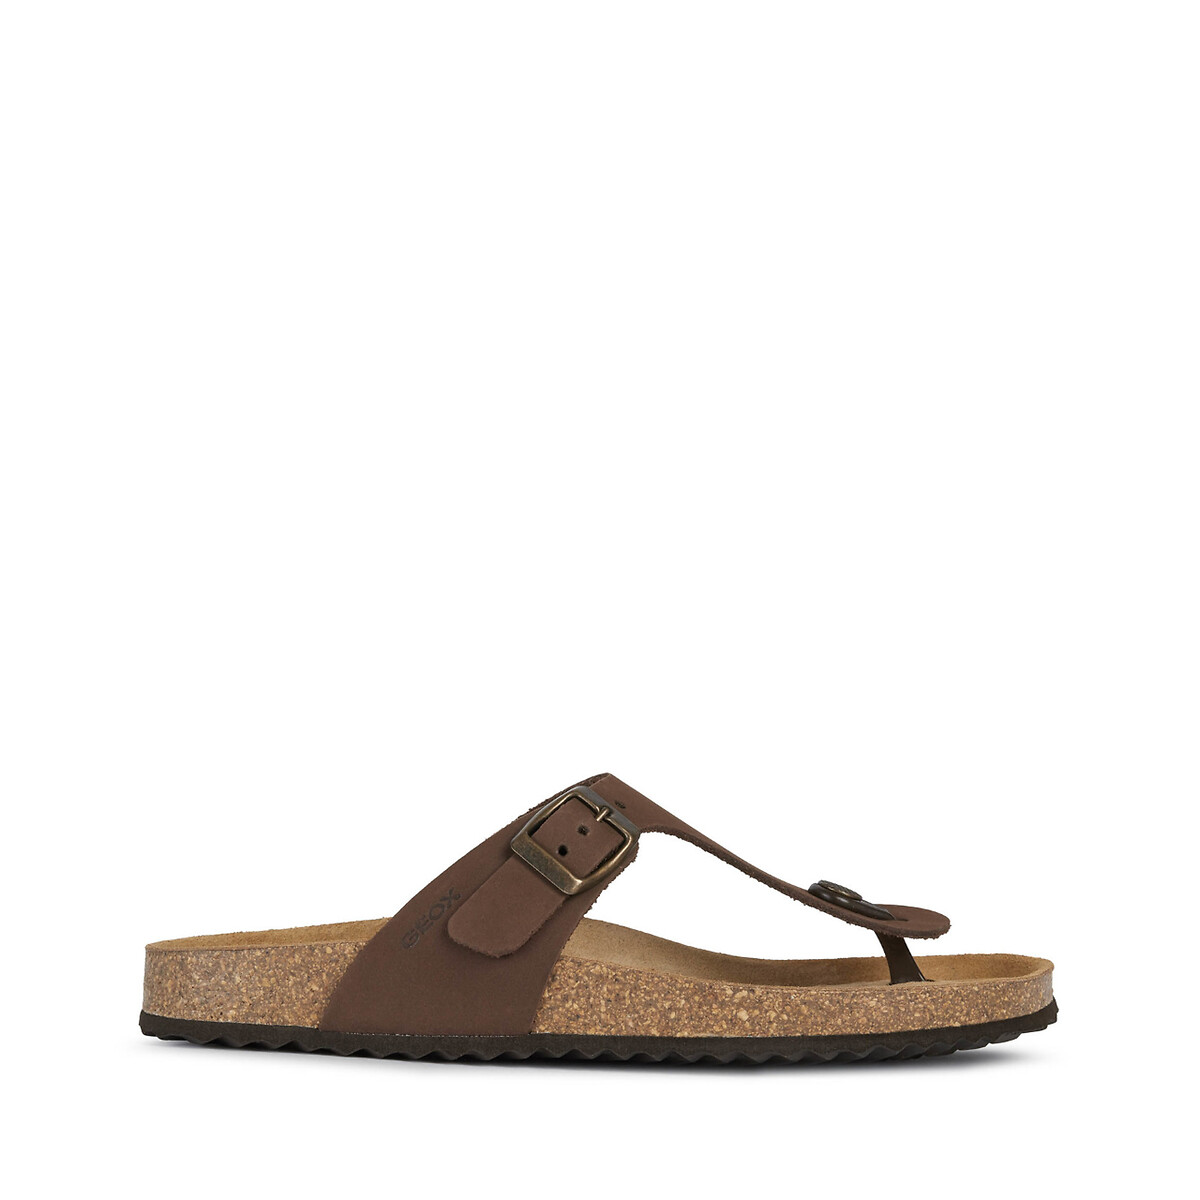 Brionia leather flip flops, brown, Geox | La Redoute